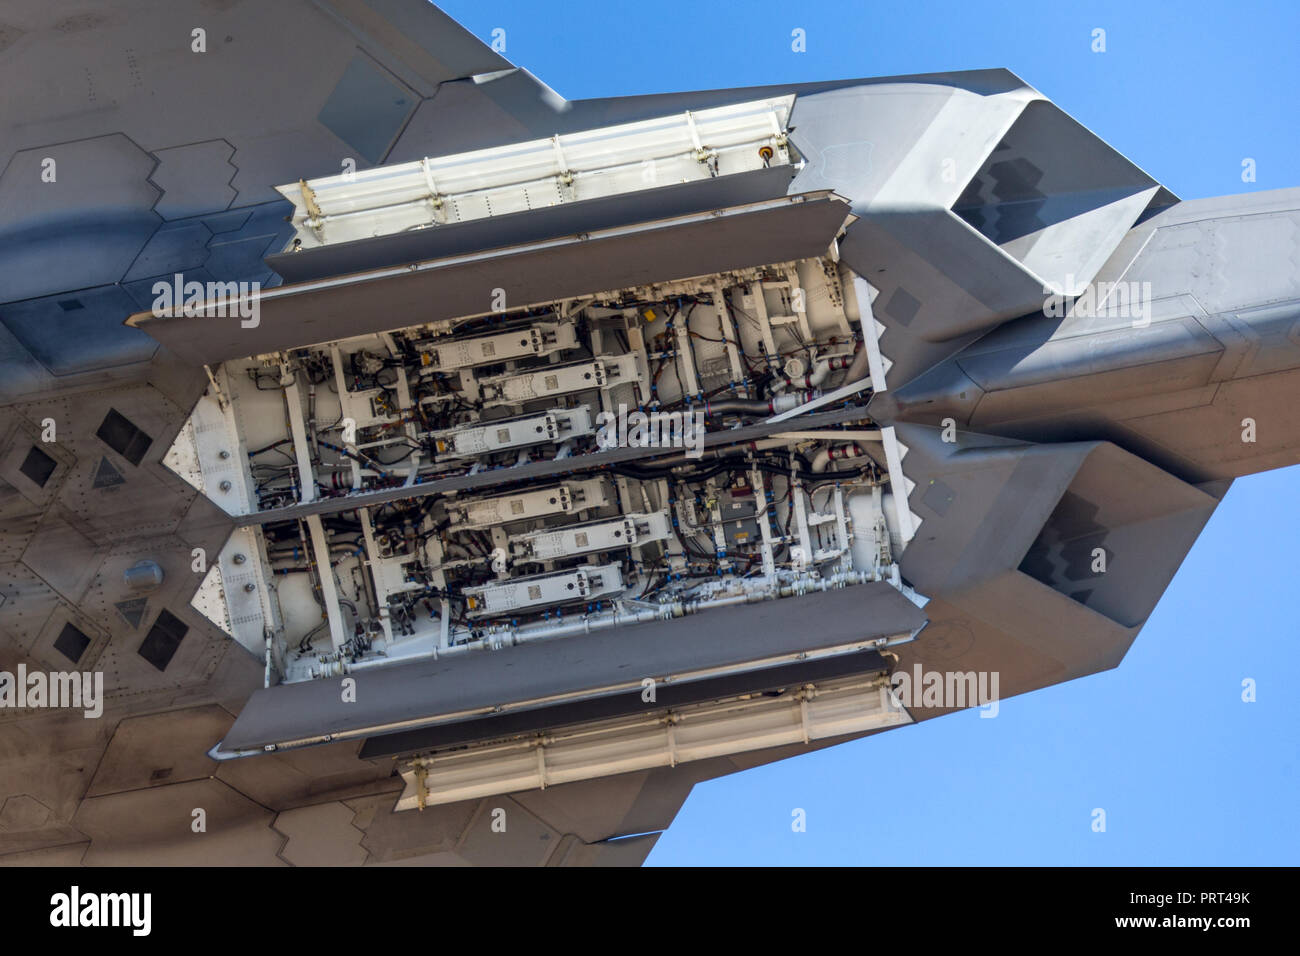 La baie d'armes de l'United States Air Force (USAF) Lockheed Martin F-22A Raptor furtif de cinquième génération d'avions d'appui tactique. Banque D'Images